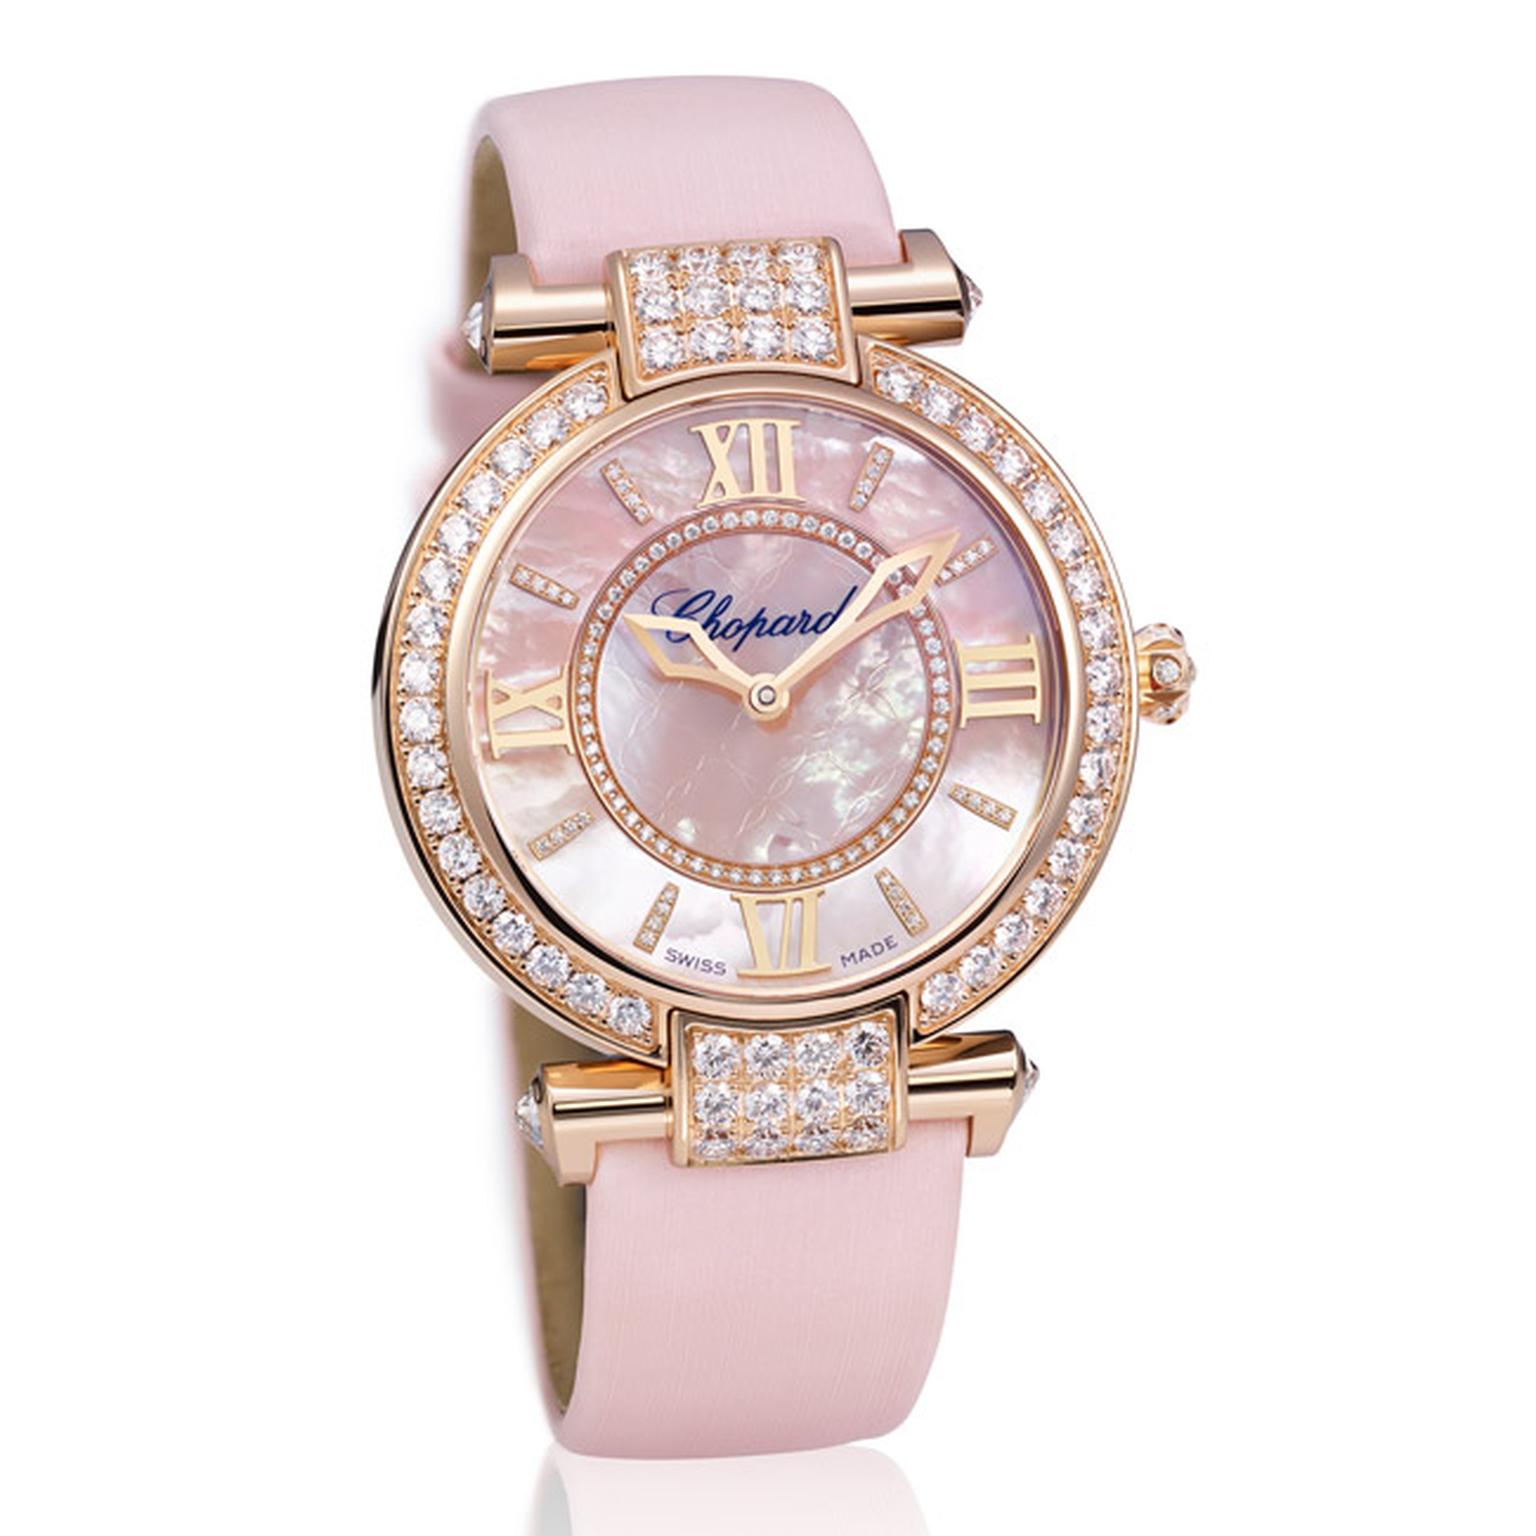 Chopard-Imperiale-Pink-Watch-Main